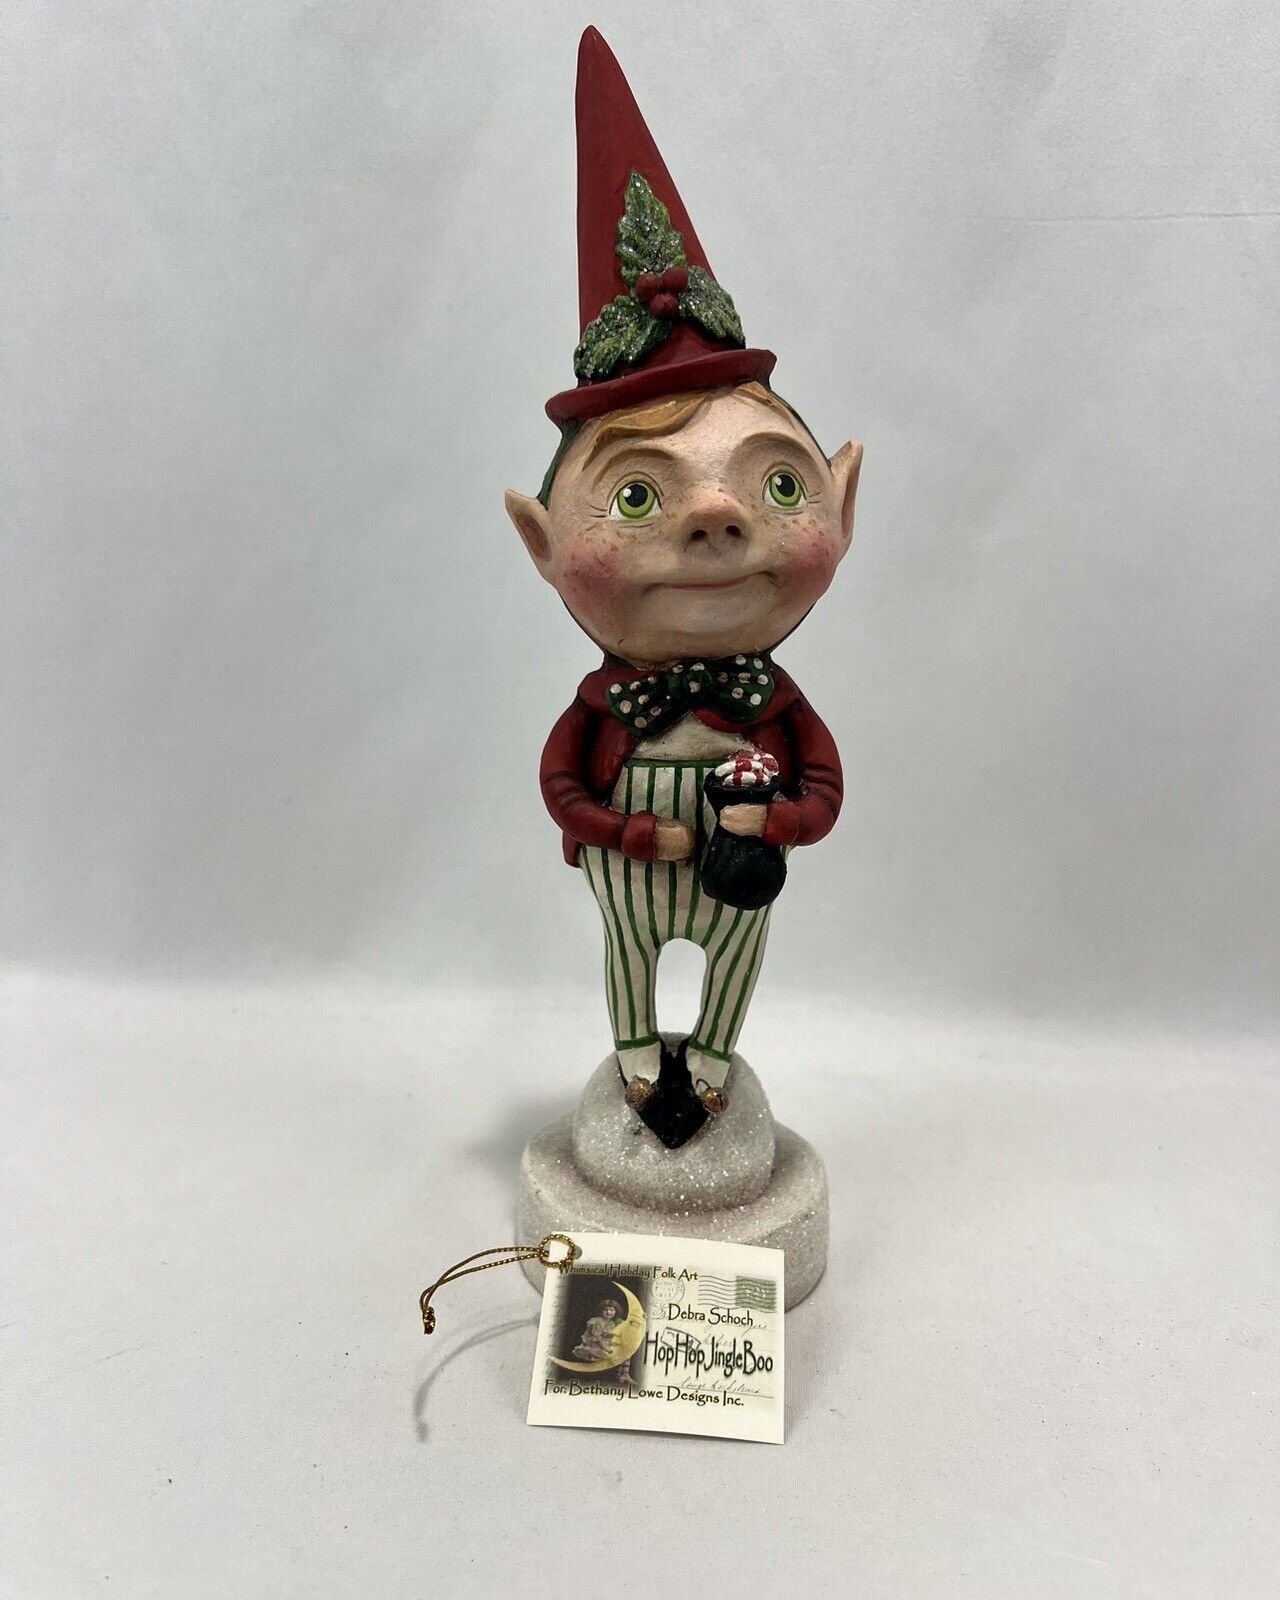 Christmas Elf Figurine by Debra Schoch for Bethany Lowe Hop Hop Jingle Boo Pixie